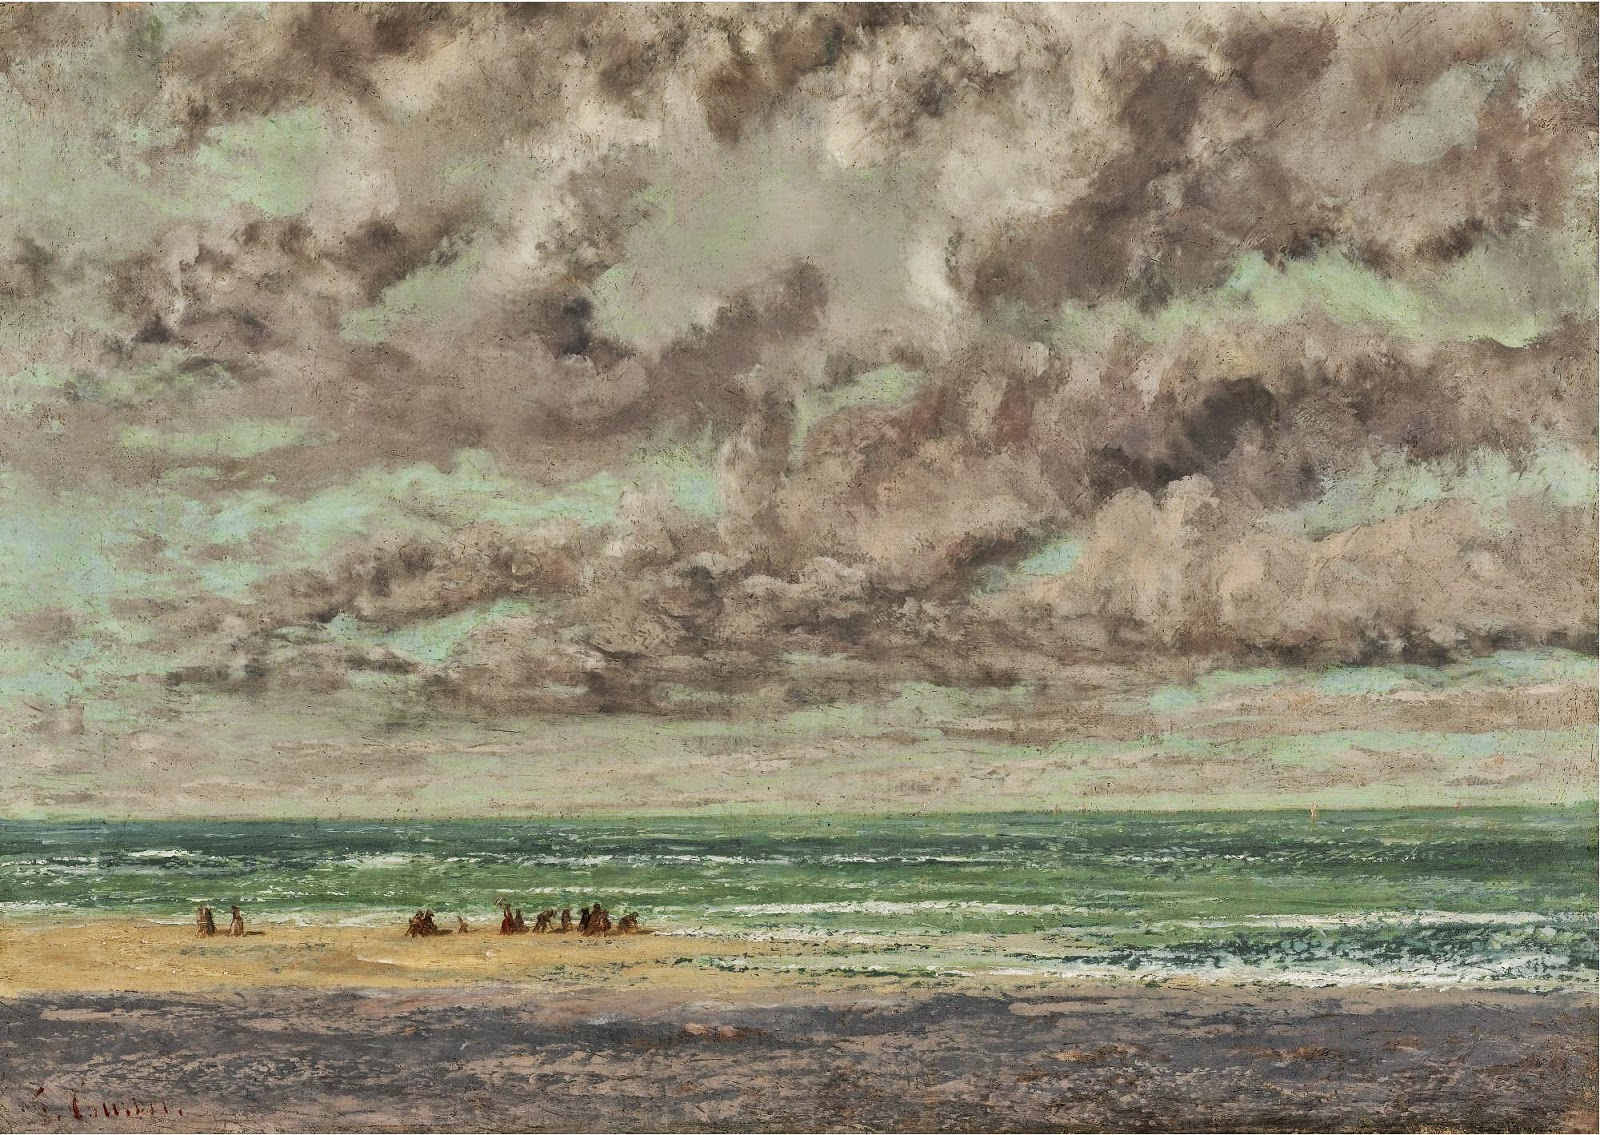 Gustave+Courbet-1819-1877 (56).jpg